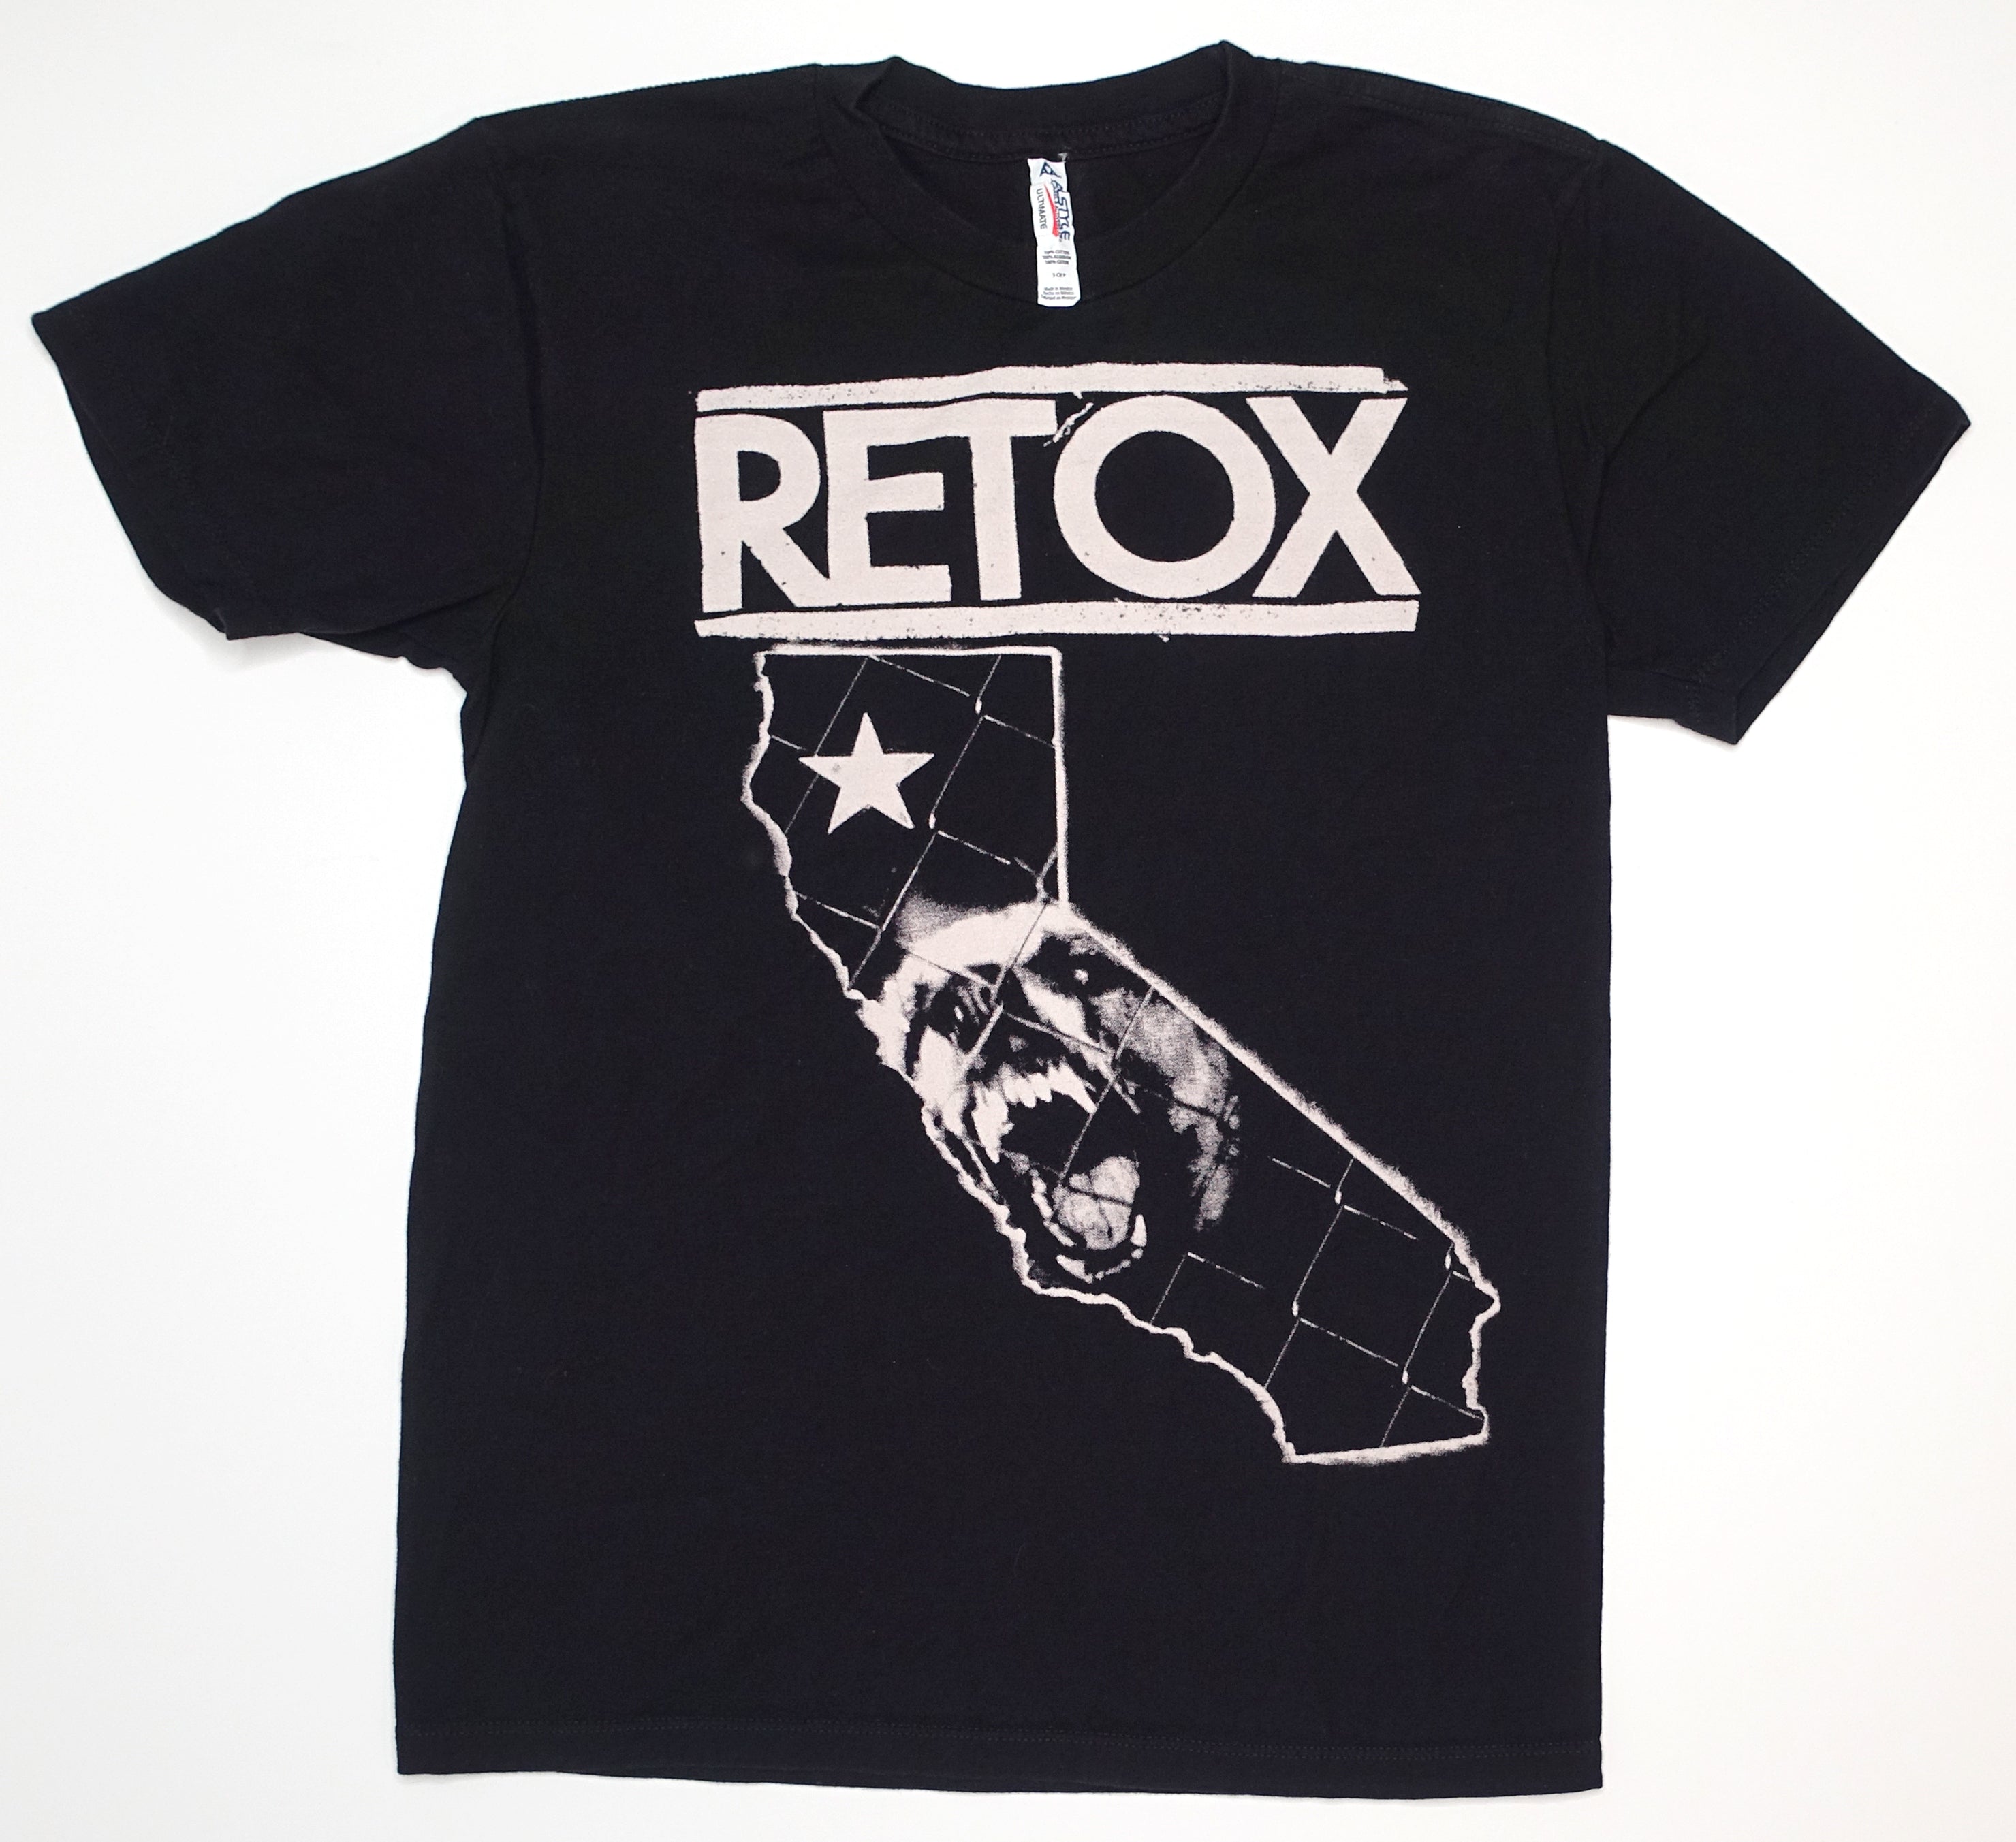 Retox - Beneath California ‎2015 Tour Shirt Size Small